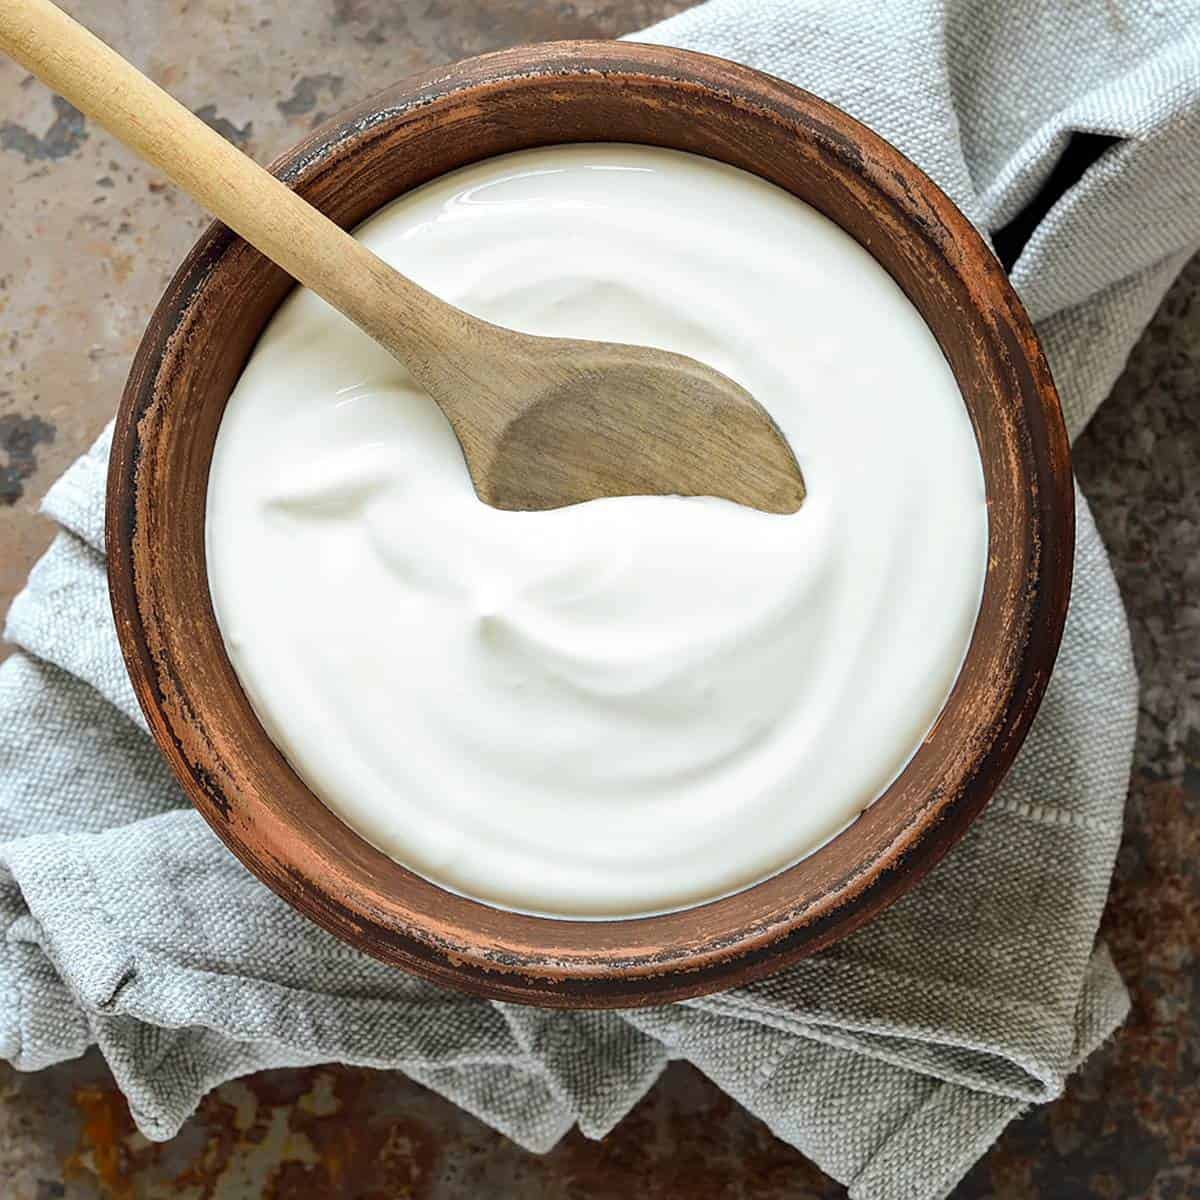 How To Make Yogurt